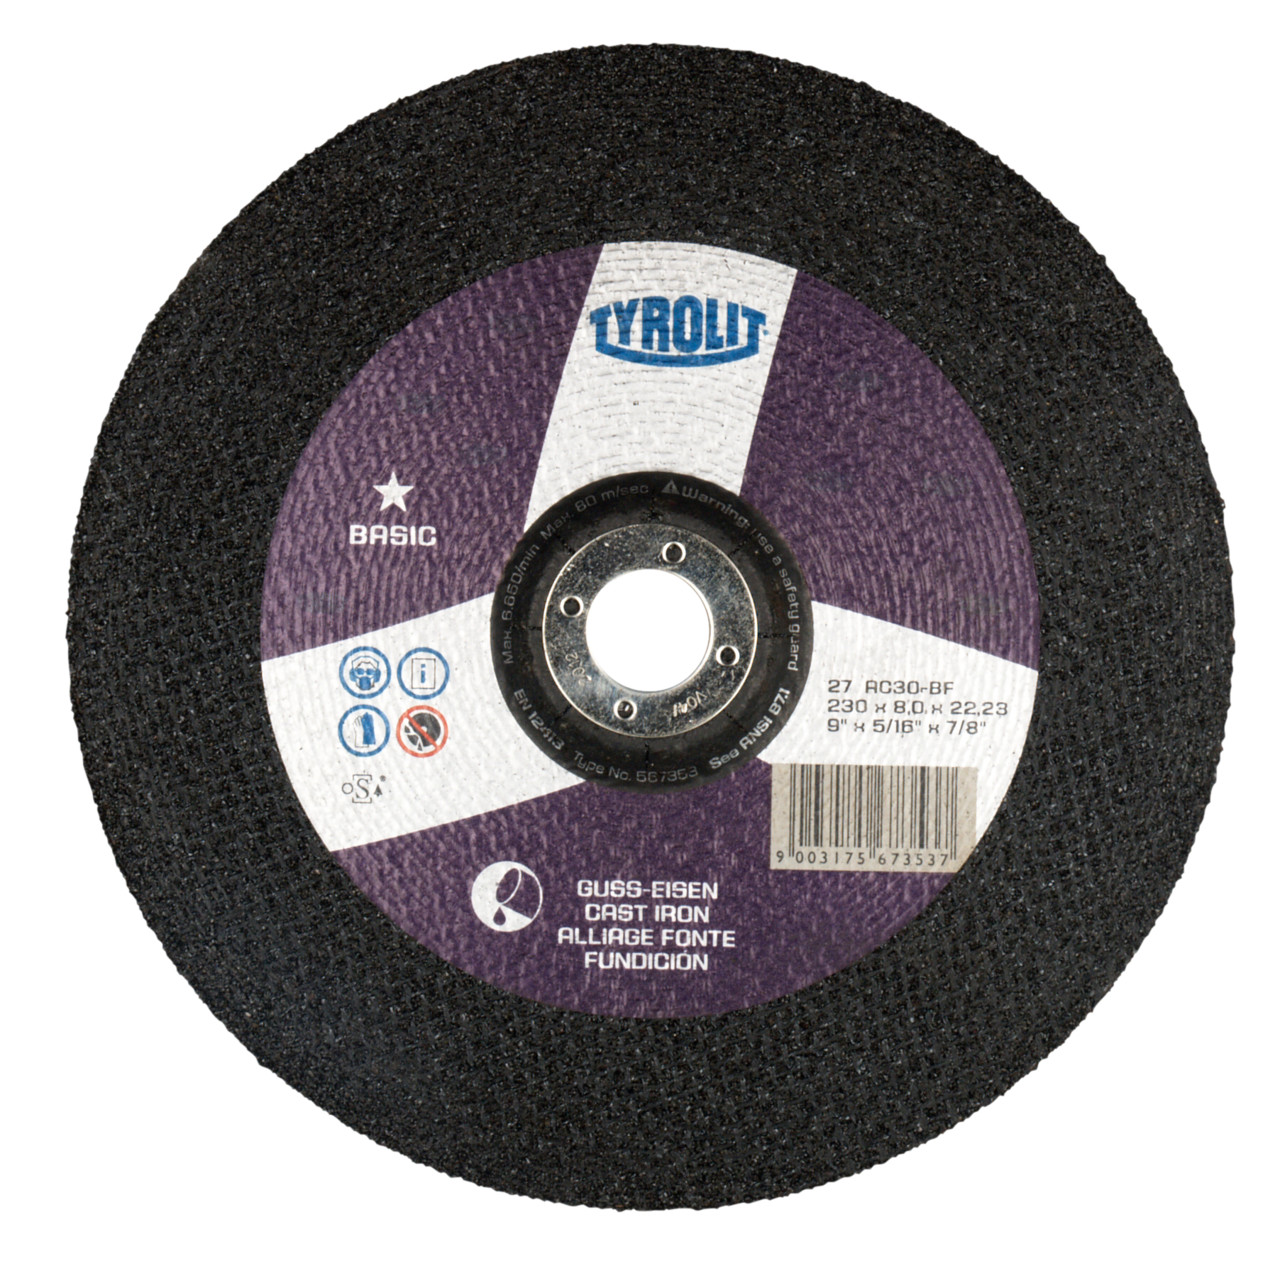 Tyrolit Roughing disc DxUxH 230x8x22.23 For cast iron, shape: 27 - offset version, Art. 567353